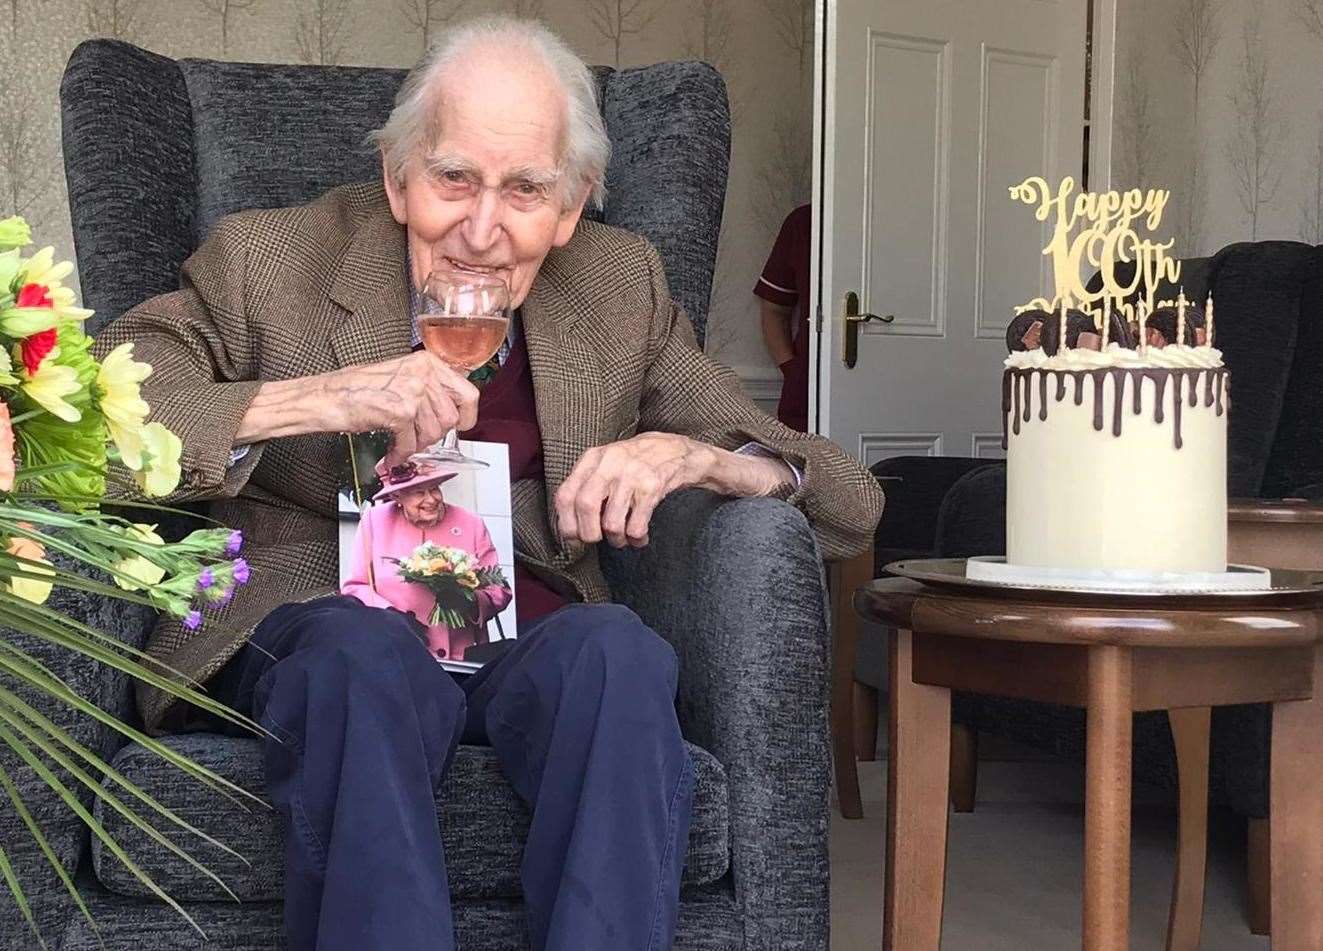 David King turned 100 on Monday